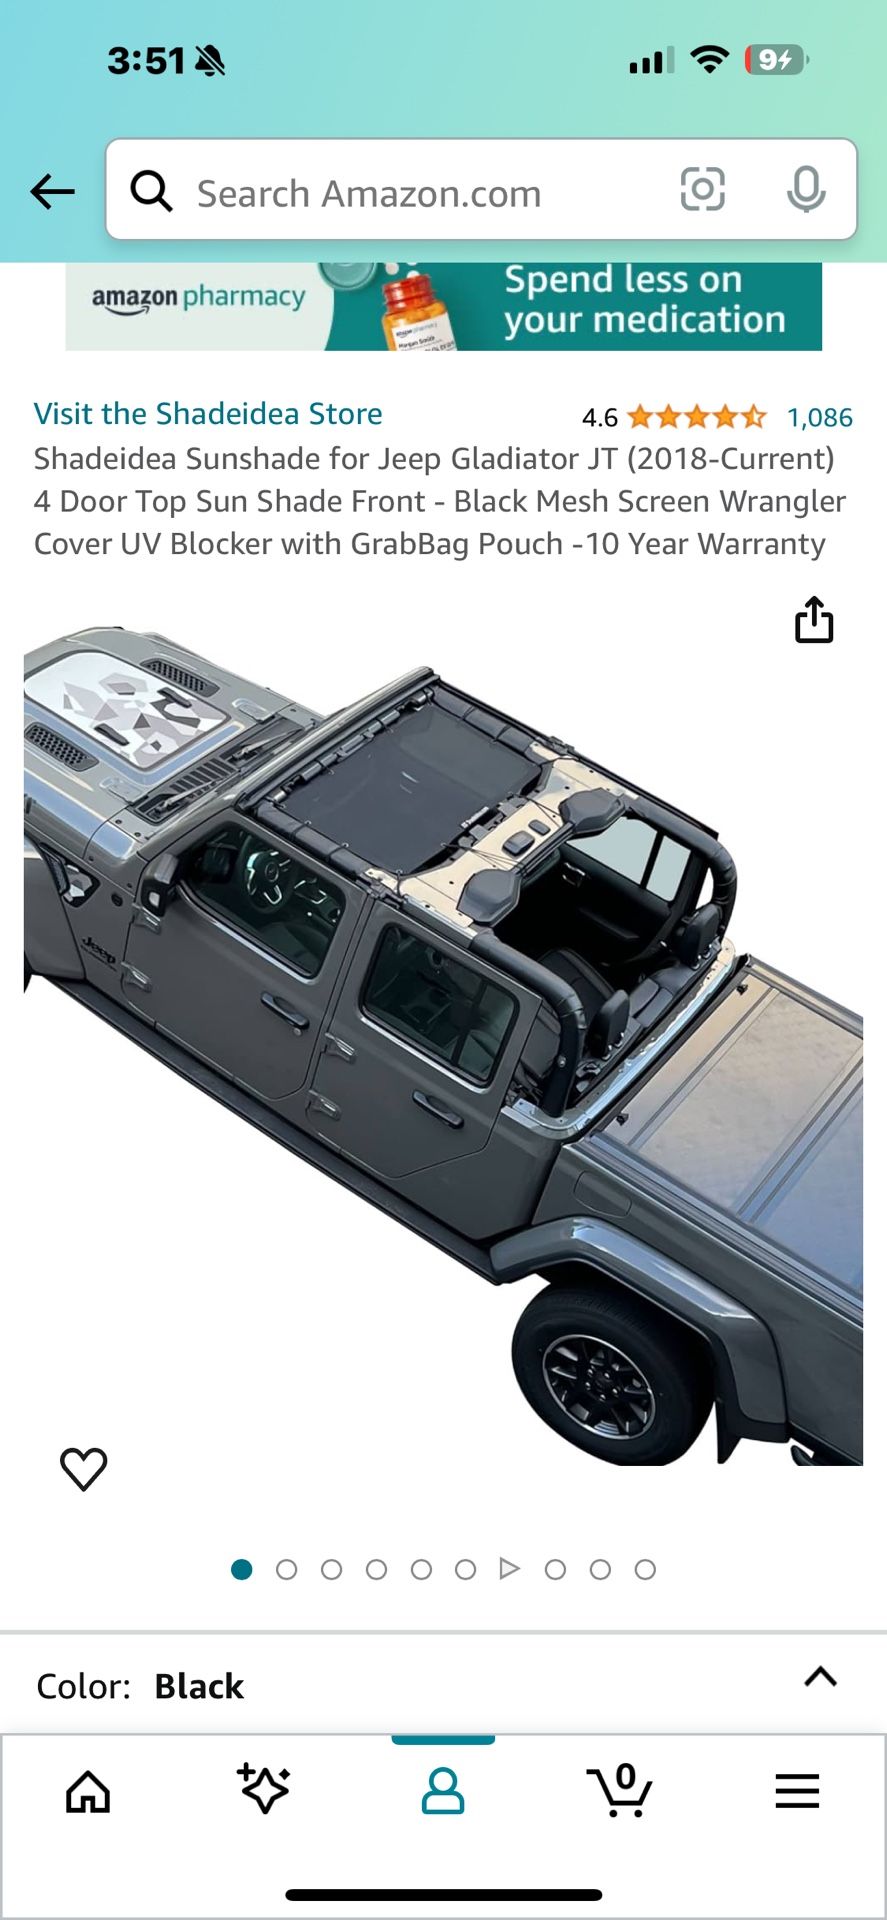 Shadeidea Sunshade for Jeep Gladiator JT (2018-Current) 